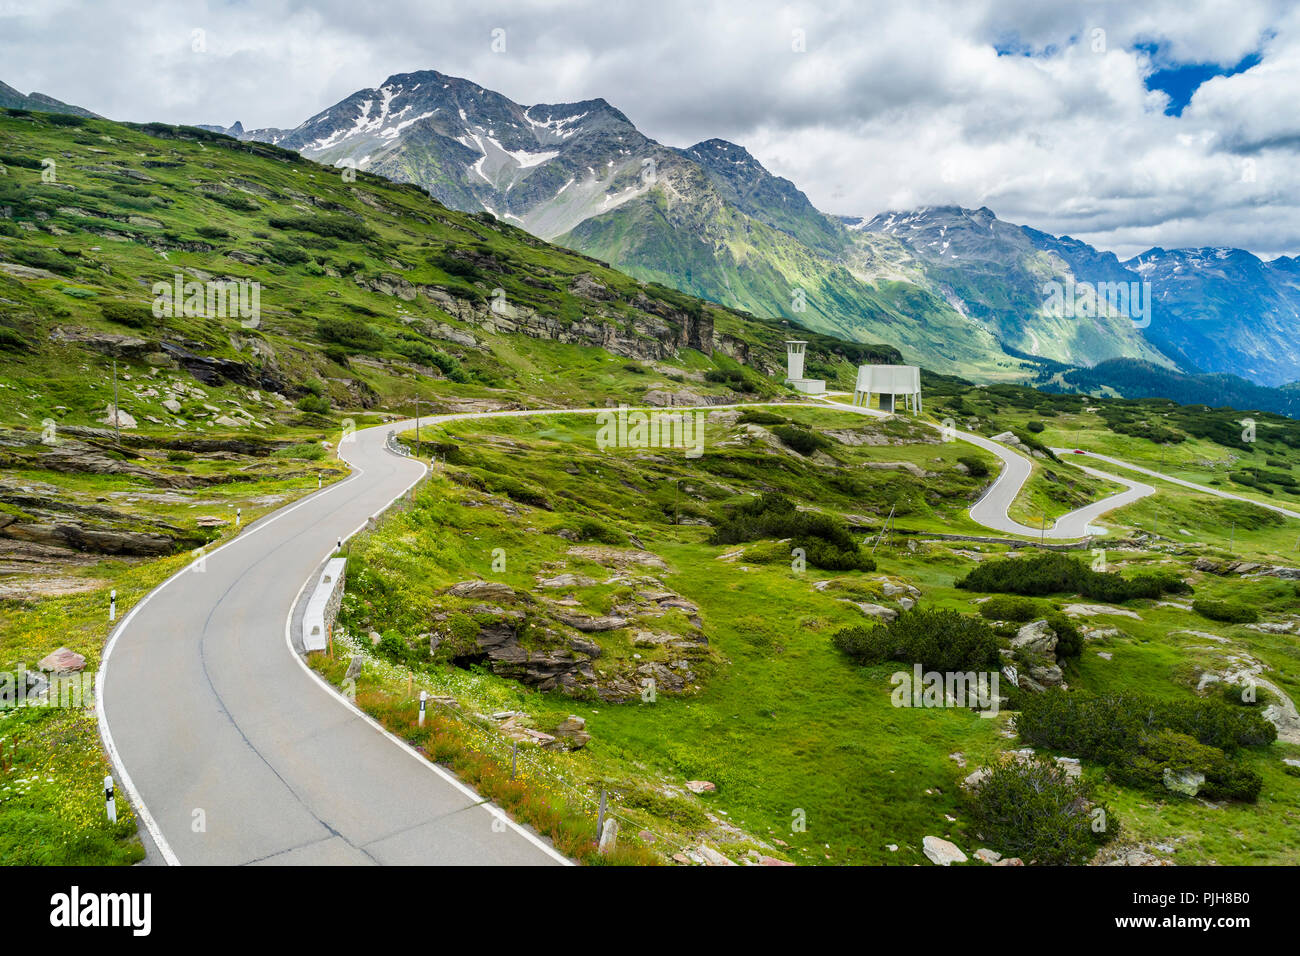 Curvy pass road San Bernadino Pass, with clouds, canton of Grisons, Switzerland Stock Photo